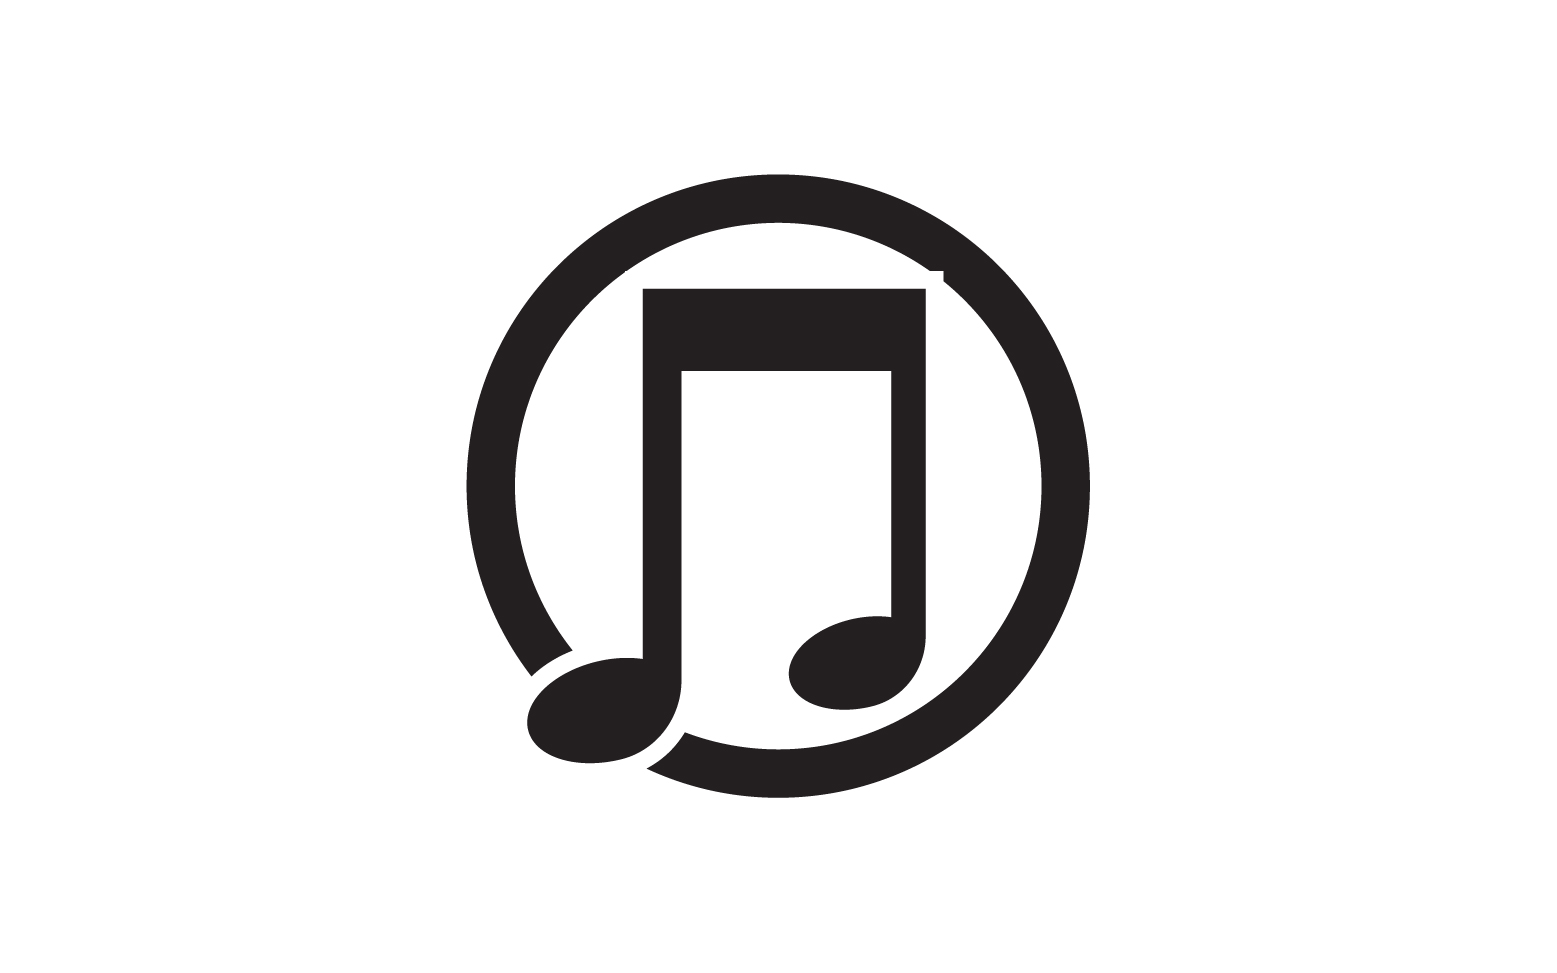 Music sound player app icon logo v14